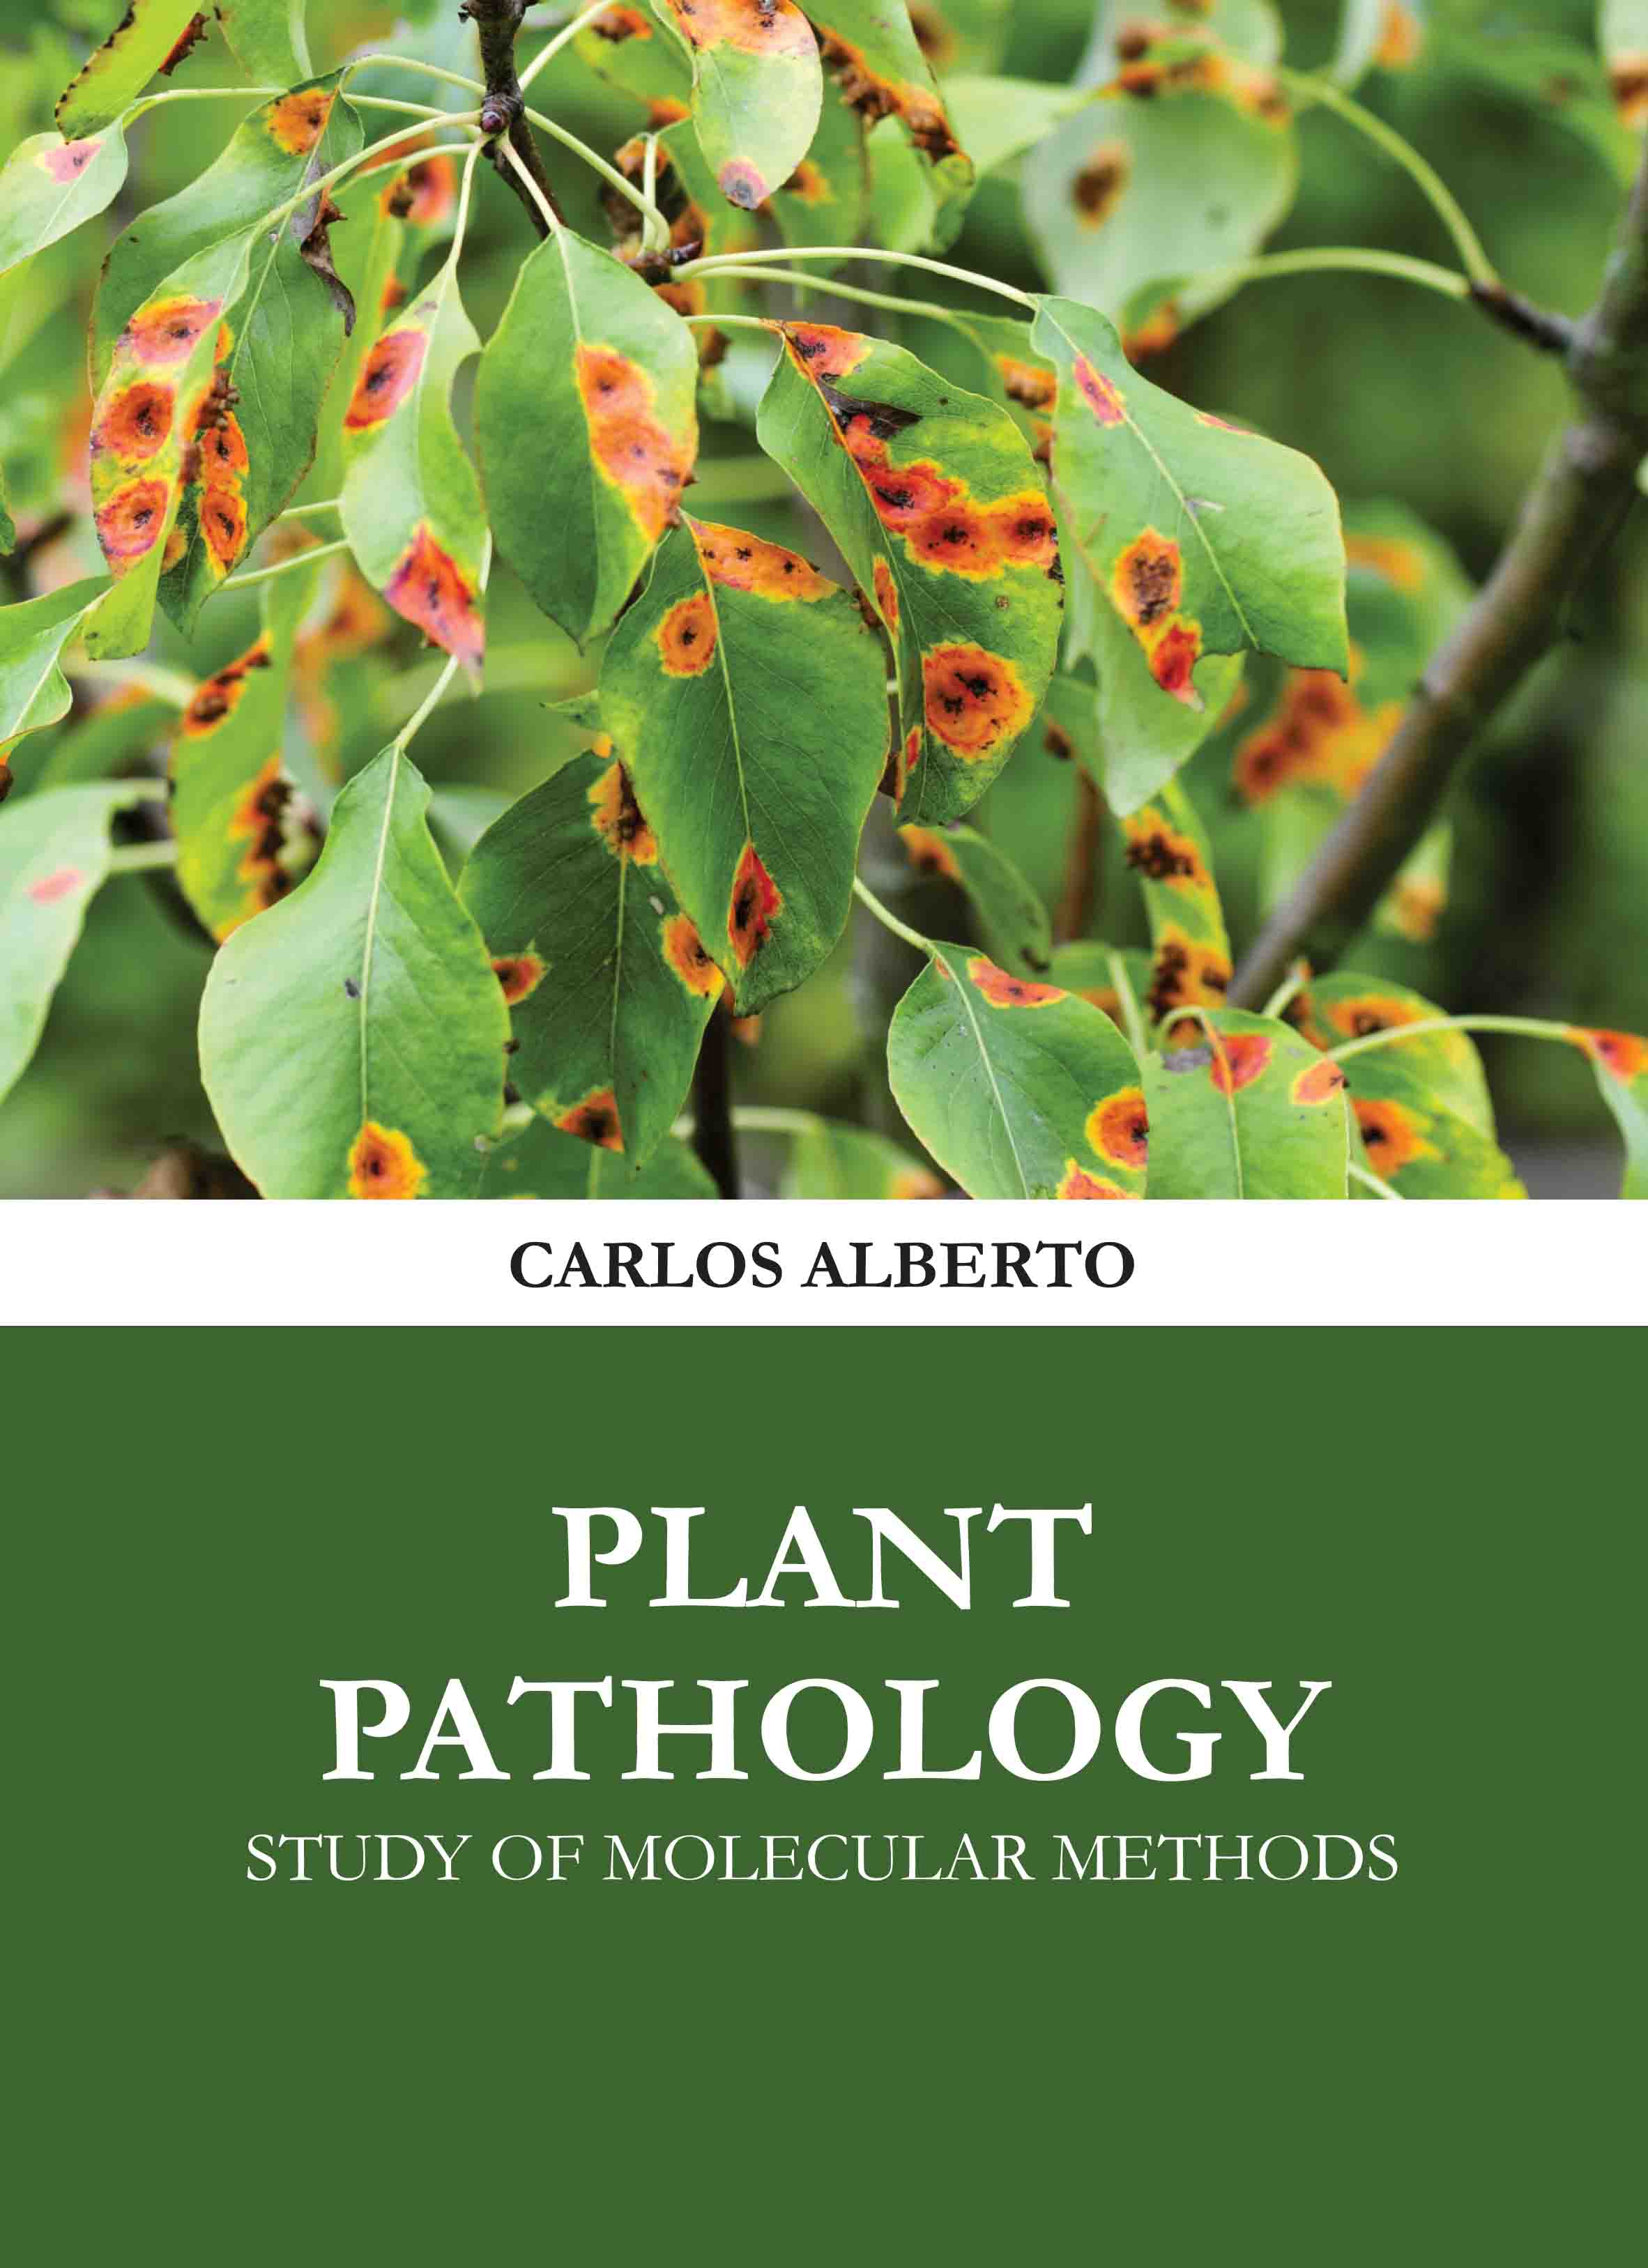 Plant Pathology: Study of Molecular Methods